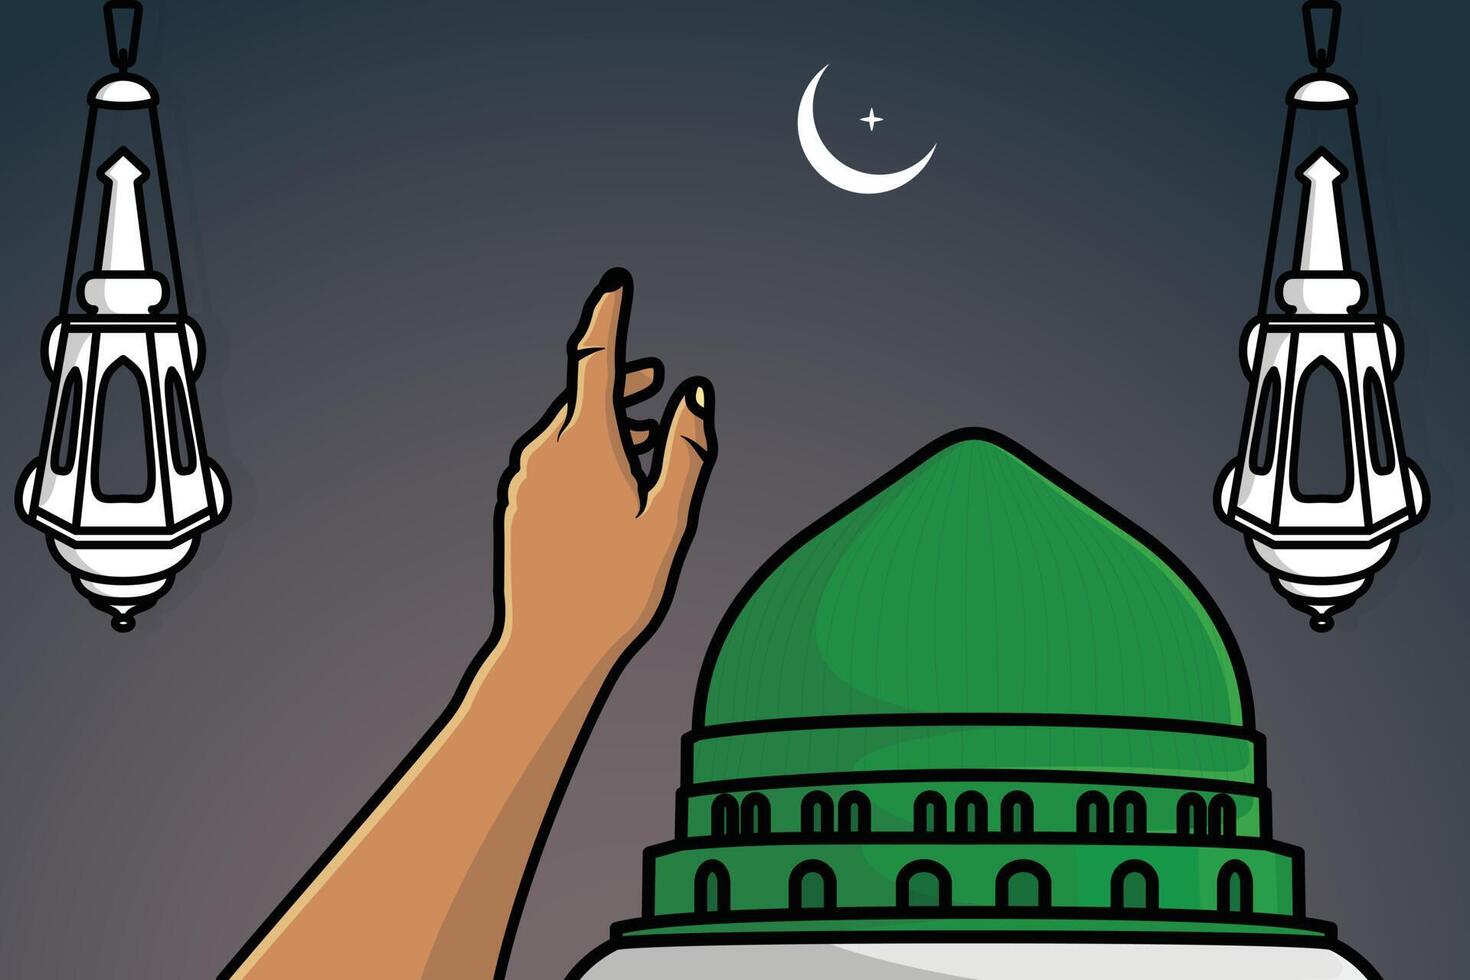 mão mostrando Ramadã kareem lua com madina masjid al Nabawi vetor ilustração. islâmico feriado ícone conceito. Ramadã kareem islâmico fundo com madina masjid al Nabawi vetor Projeto.